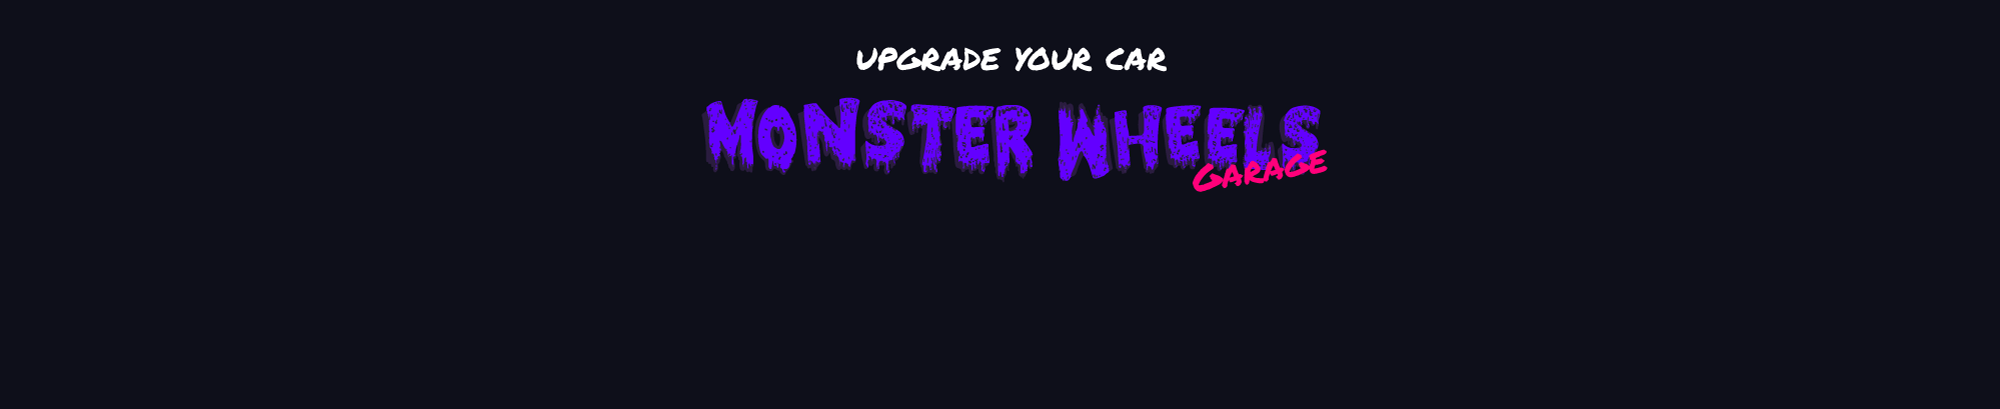 Monster Wheels Garage